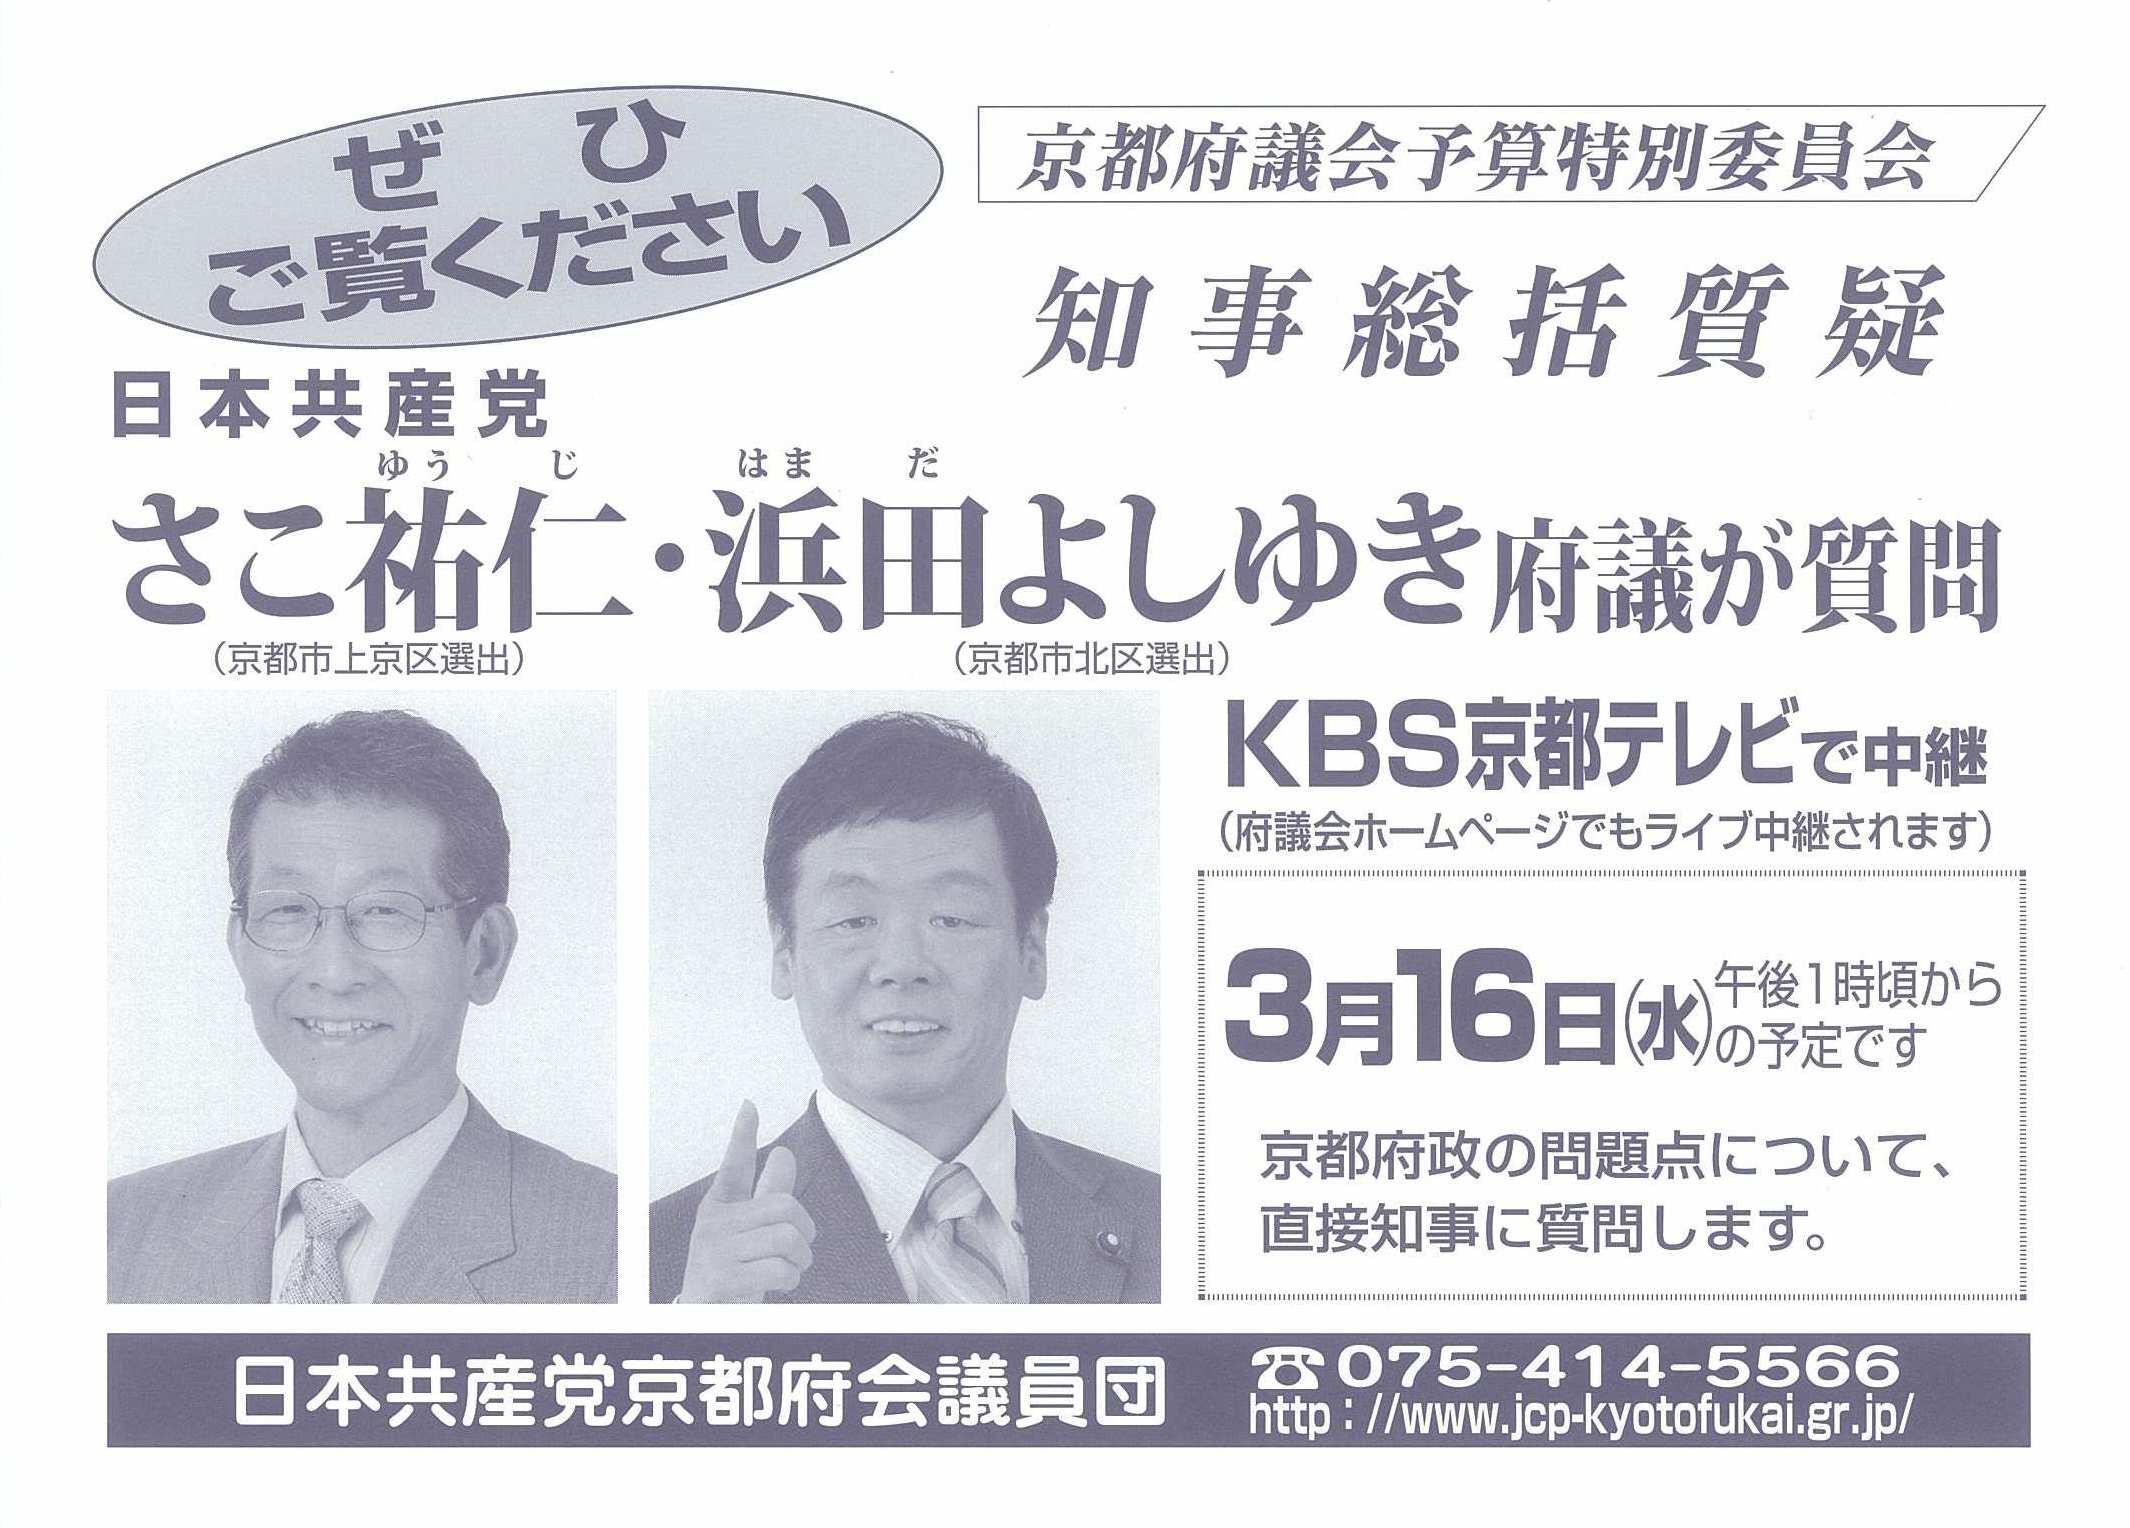 http://www.jcp-kyotofukai.gr.jp/info/uploads/%E7%9F%A5%E4%BA%8B%E7%B7%8F%E6%8B%AC.jpg